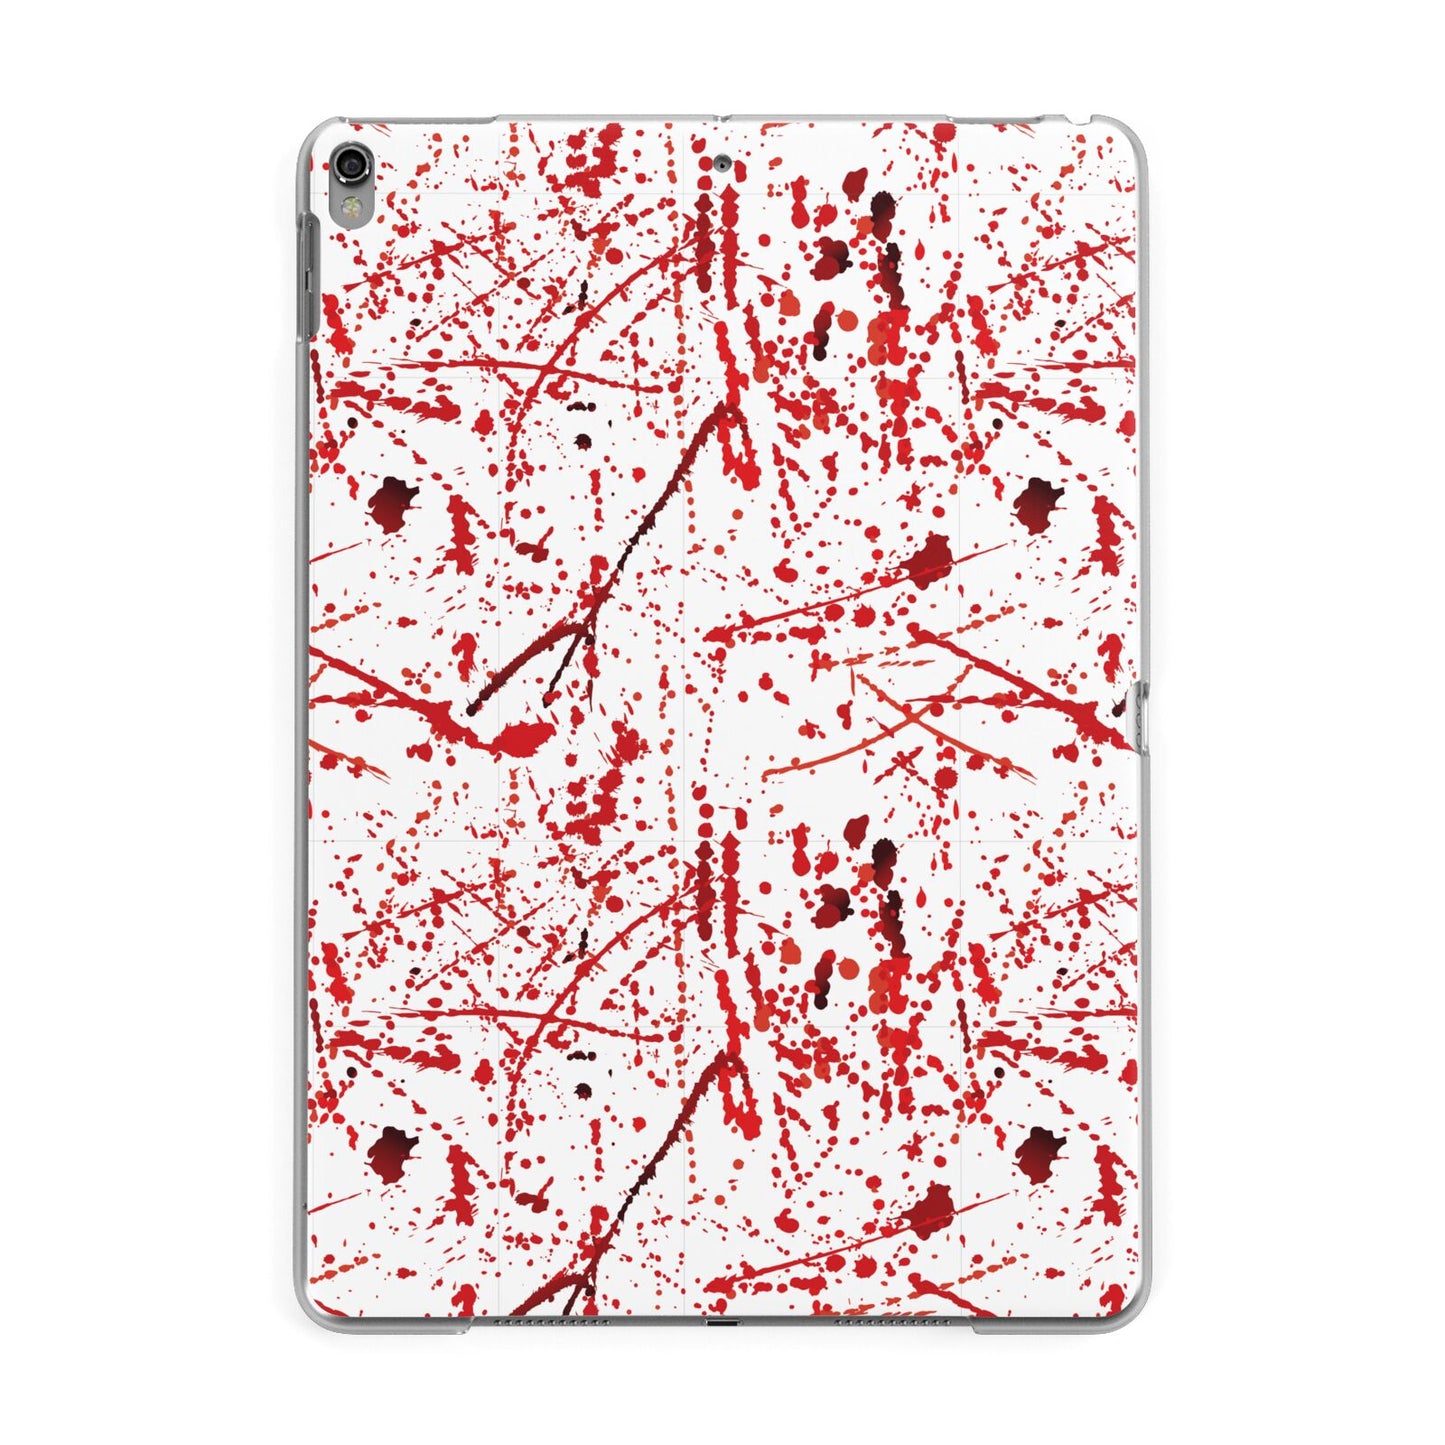 Blood Splatter Apple iPad Grey Case